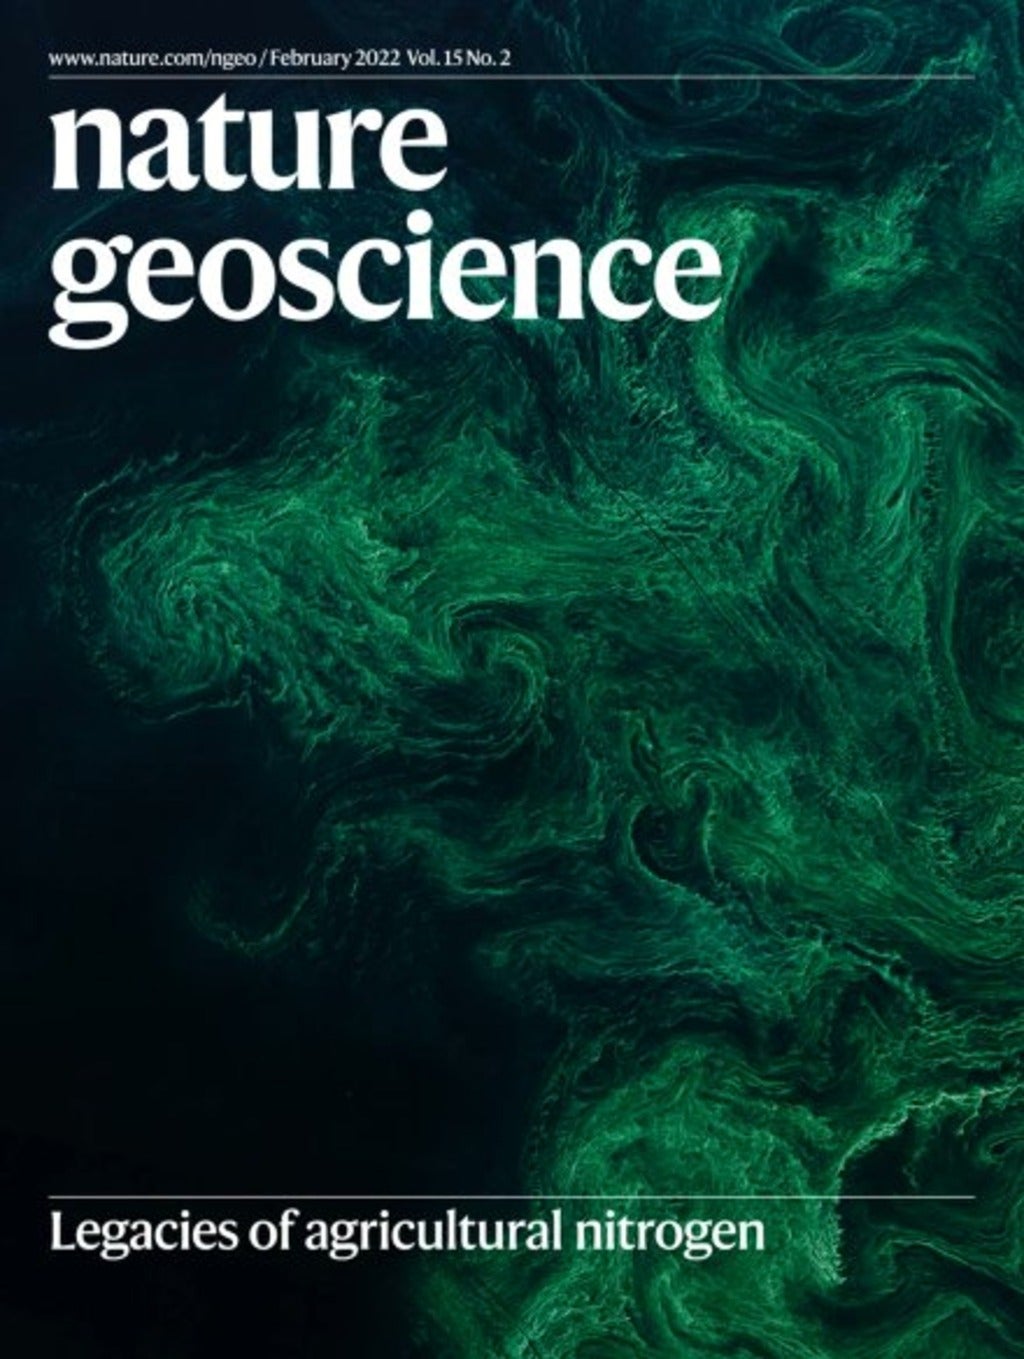 nature geoscience image